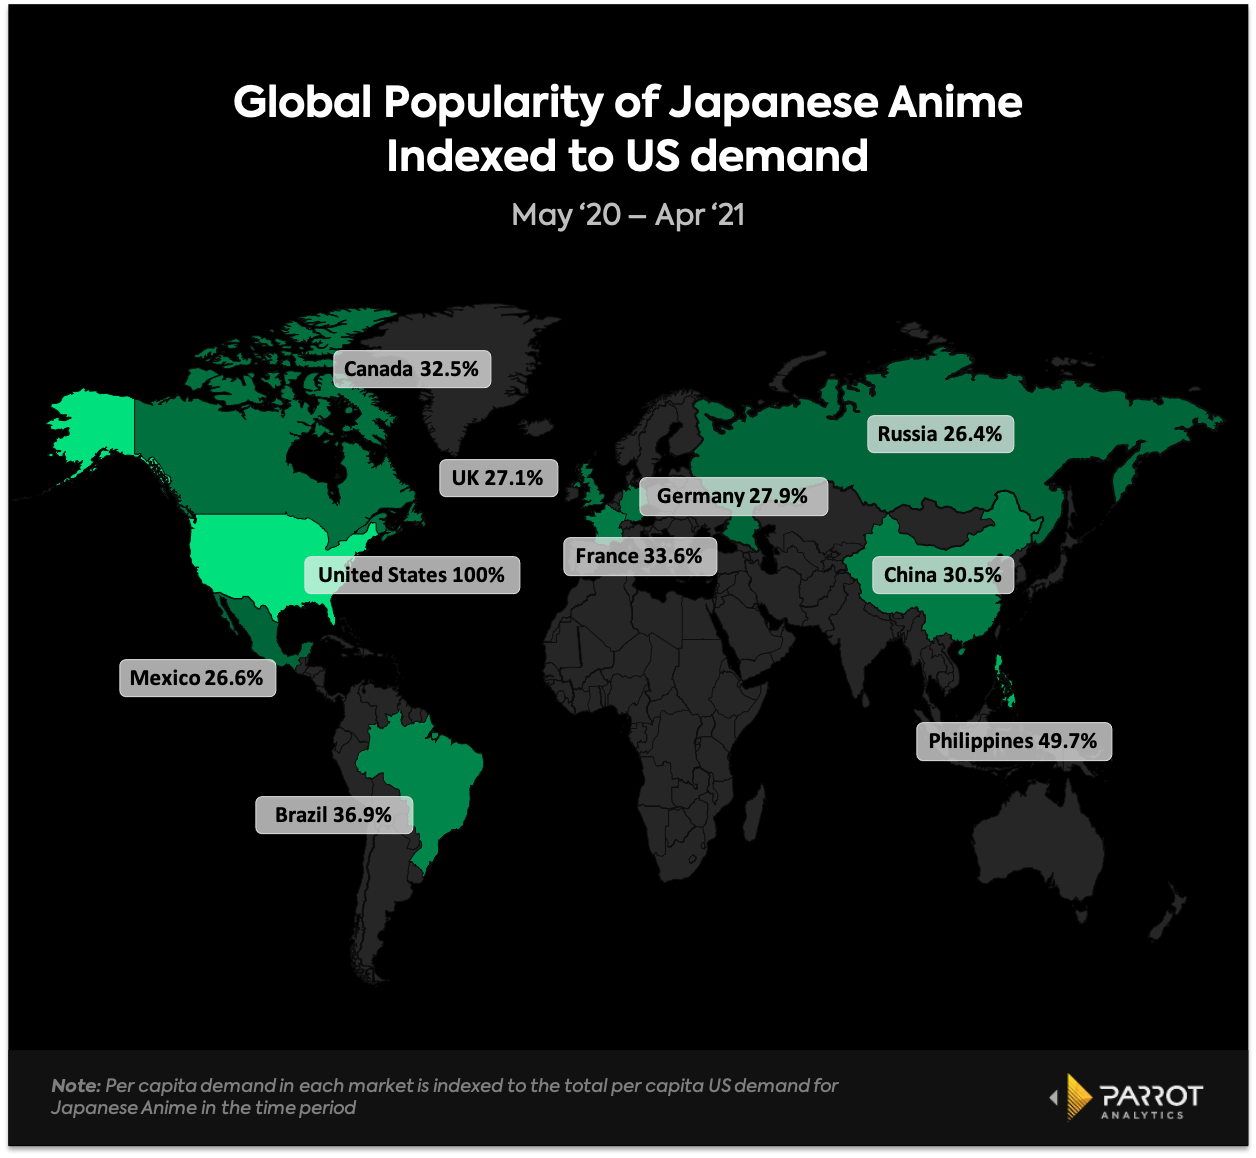 The USA has the highest enthusiasm for anime